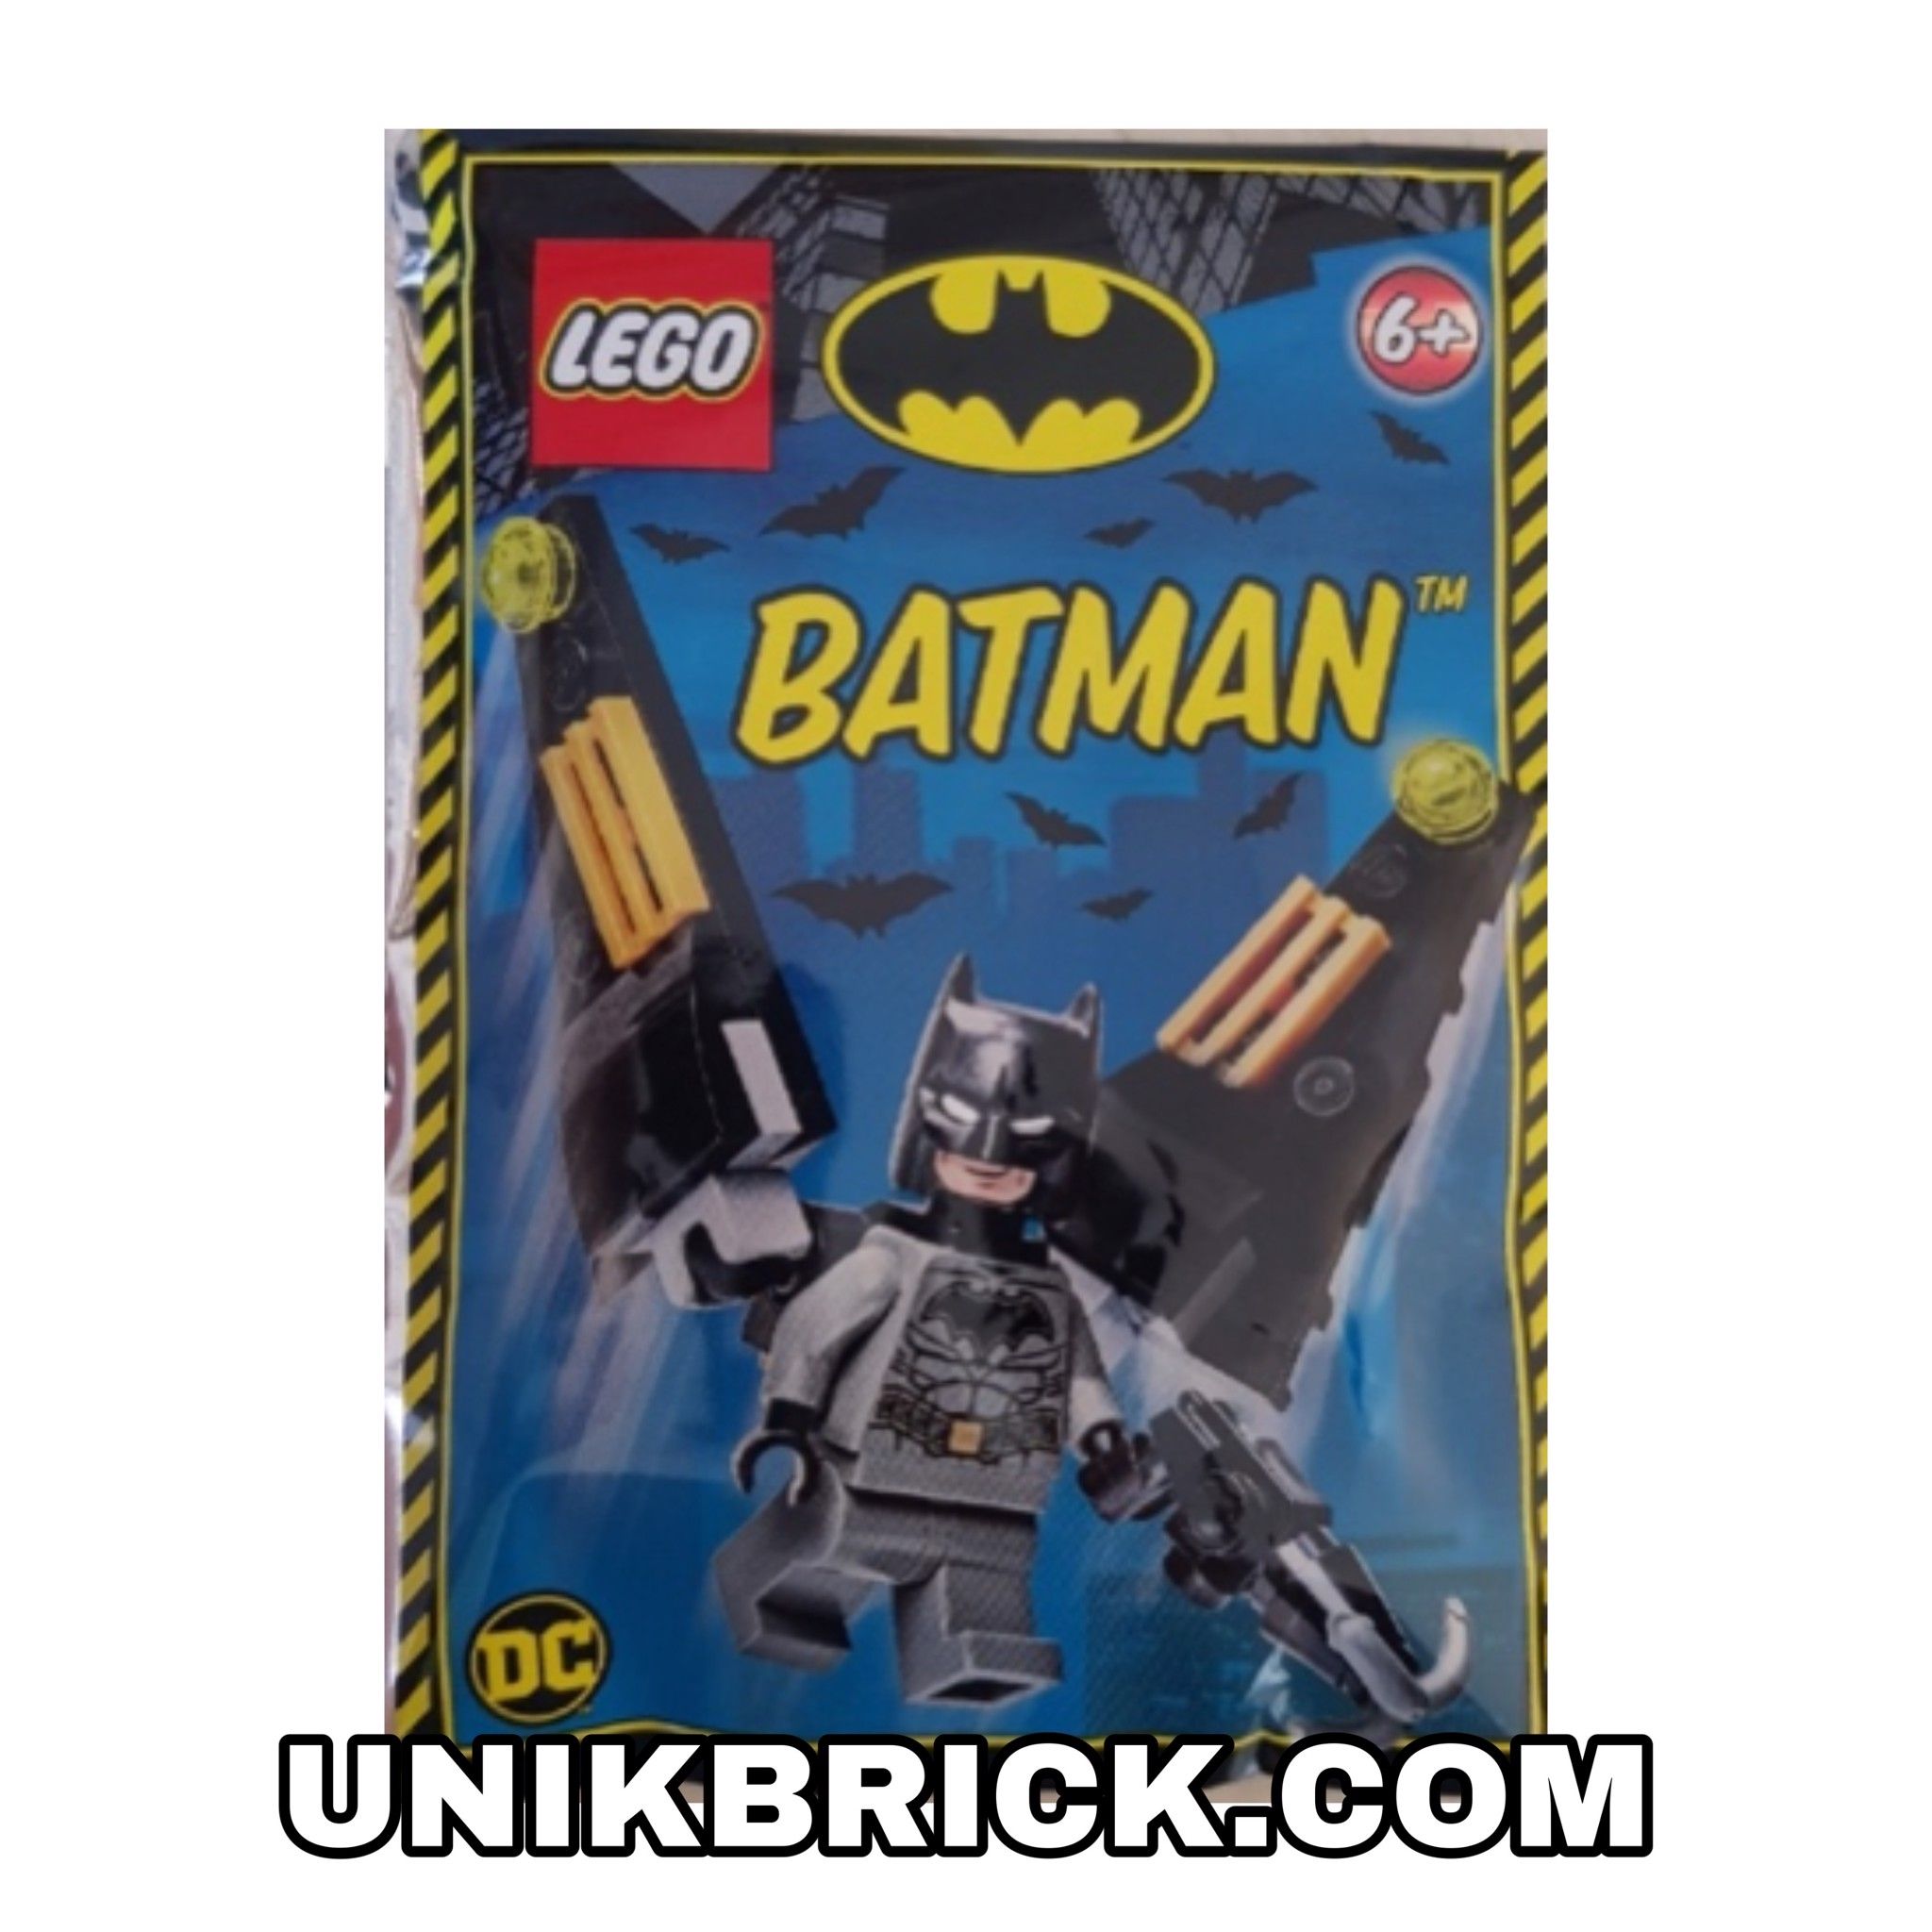 ORDER ITEMS] LEGO Batman with Wings Foil Pack – UNIK BRICK